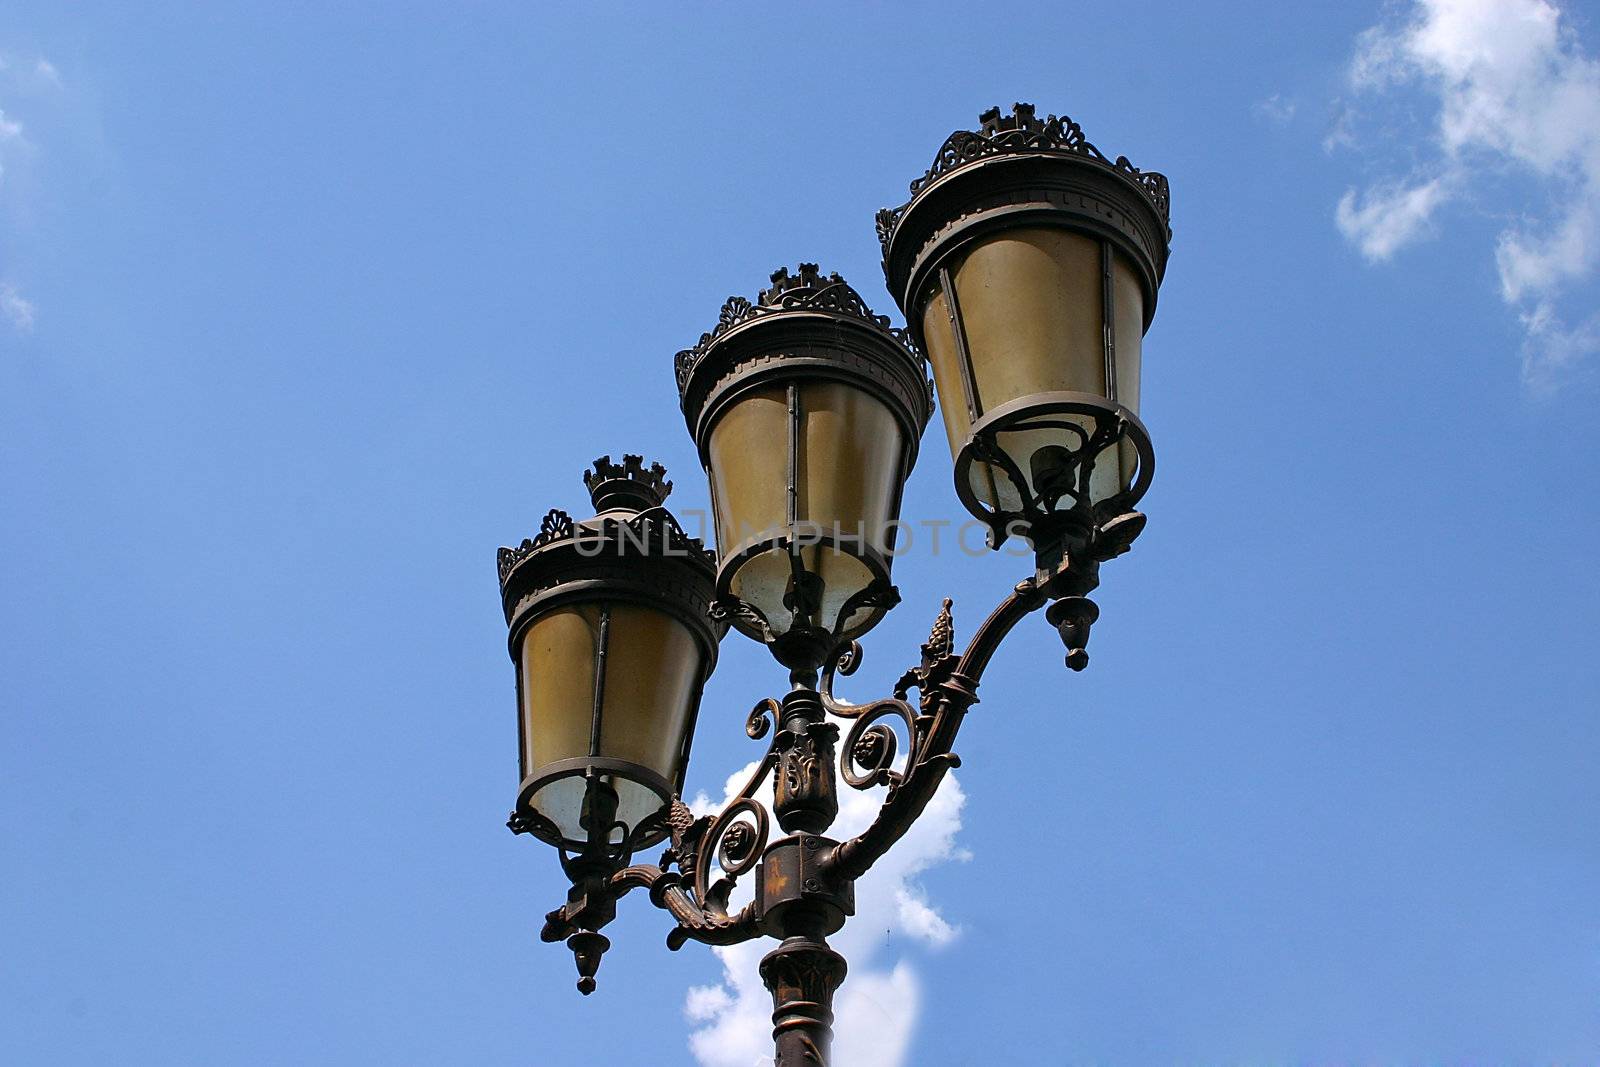 Three special street lanterns in Paris - France